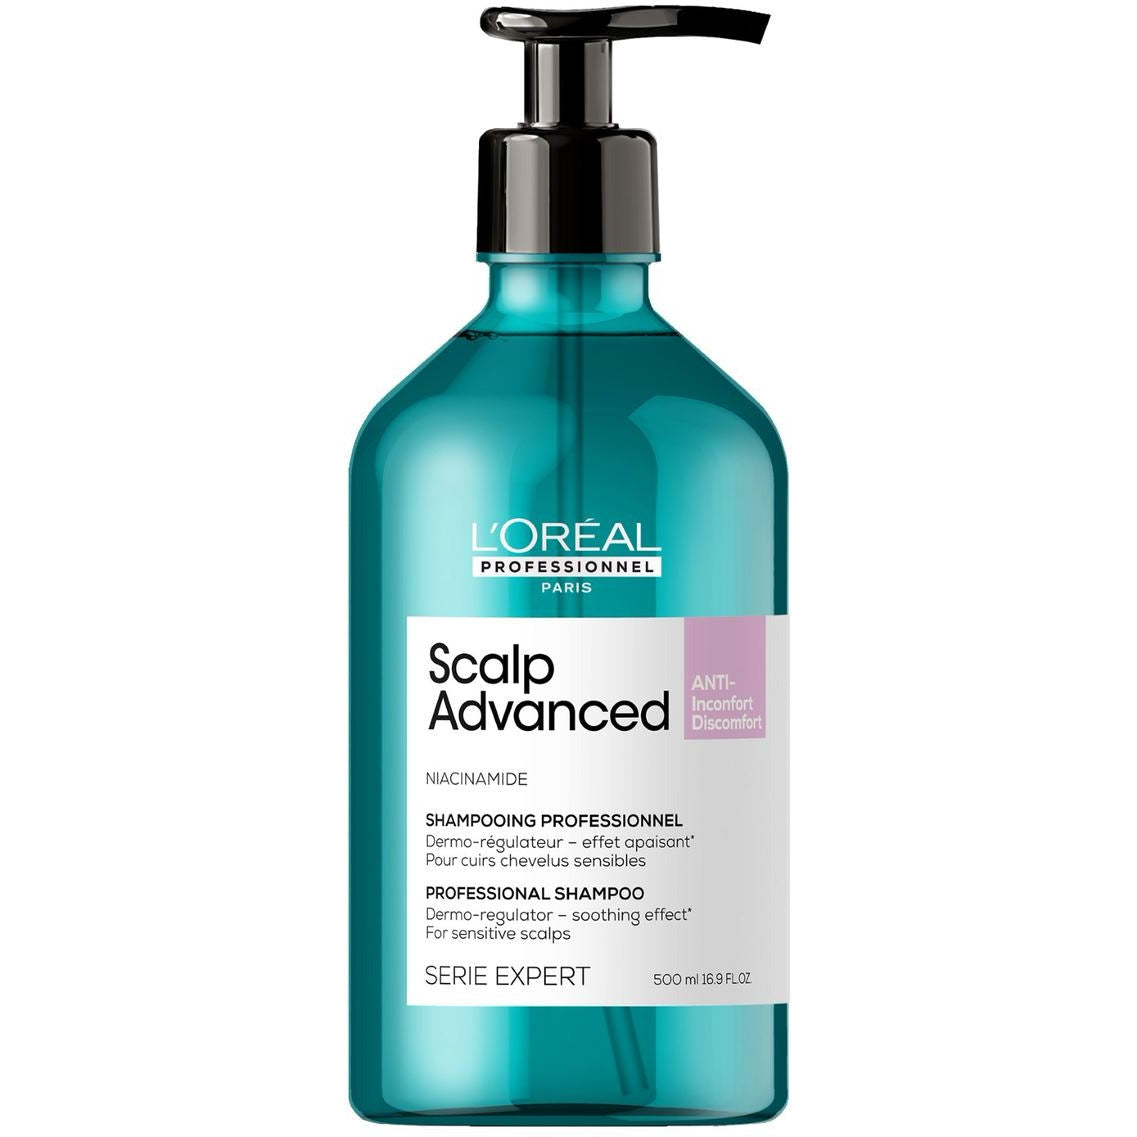 Scalp Advanced – Anti-Discomfort Shampoo – 500ml